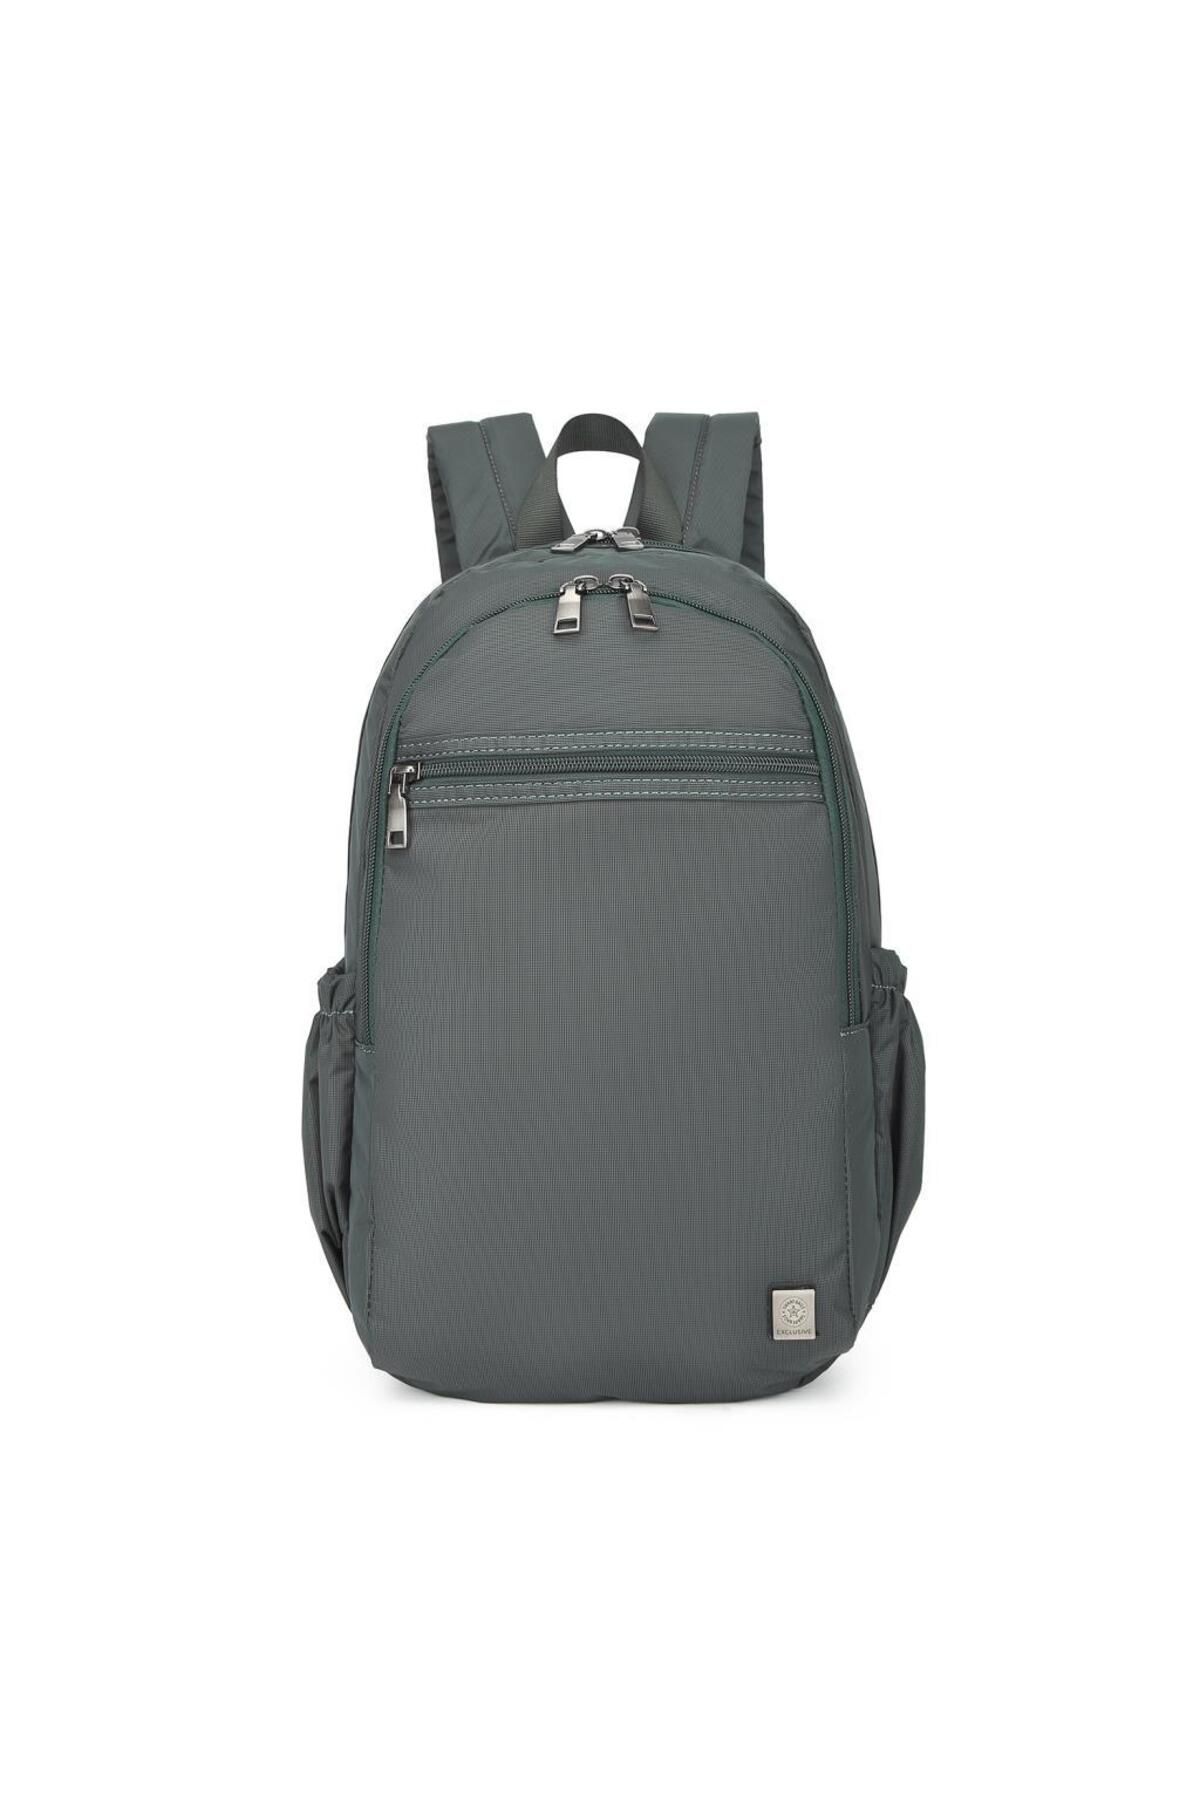 Smart Bags Exclusive Serisi Uniseks Sırt Çantası Smart Bags 8711